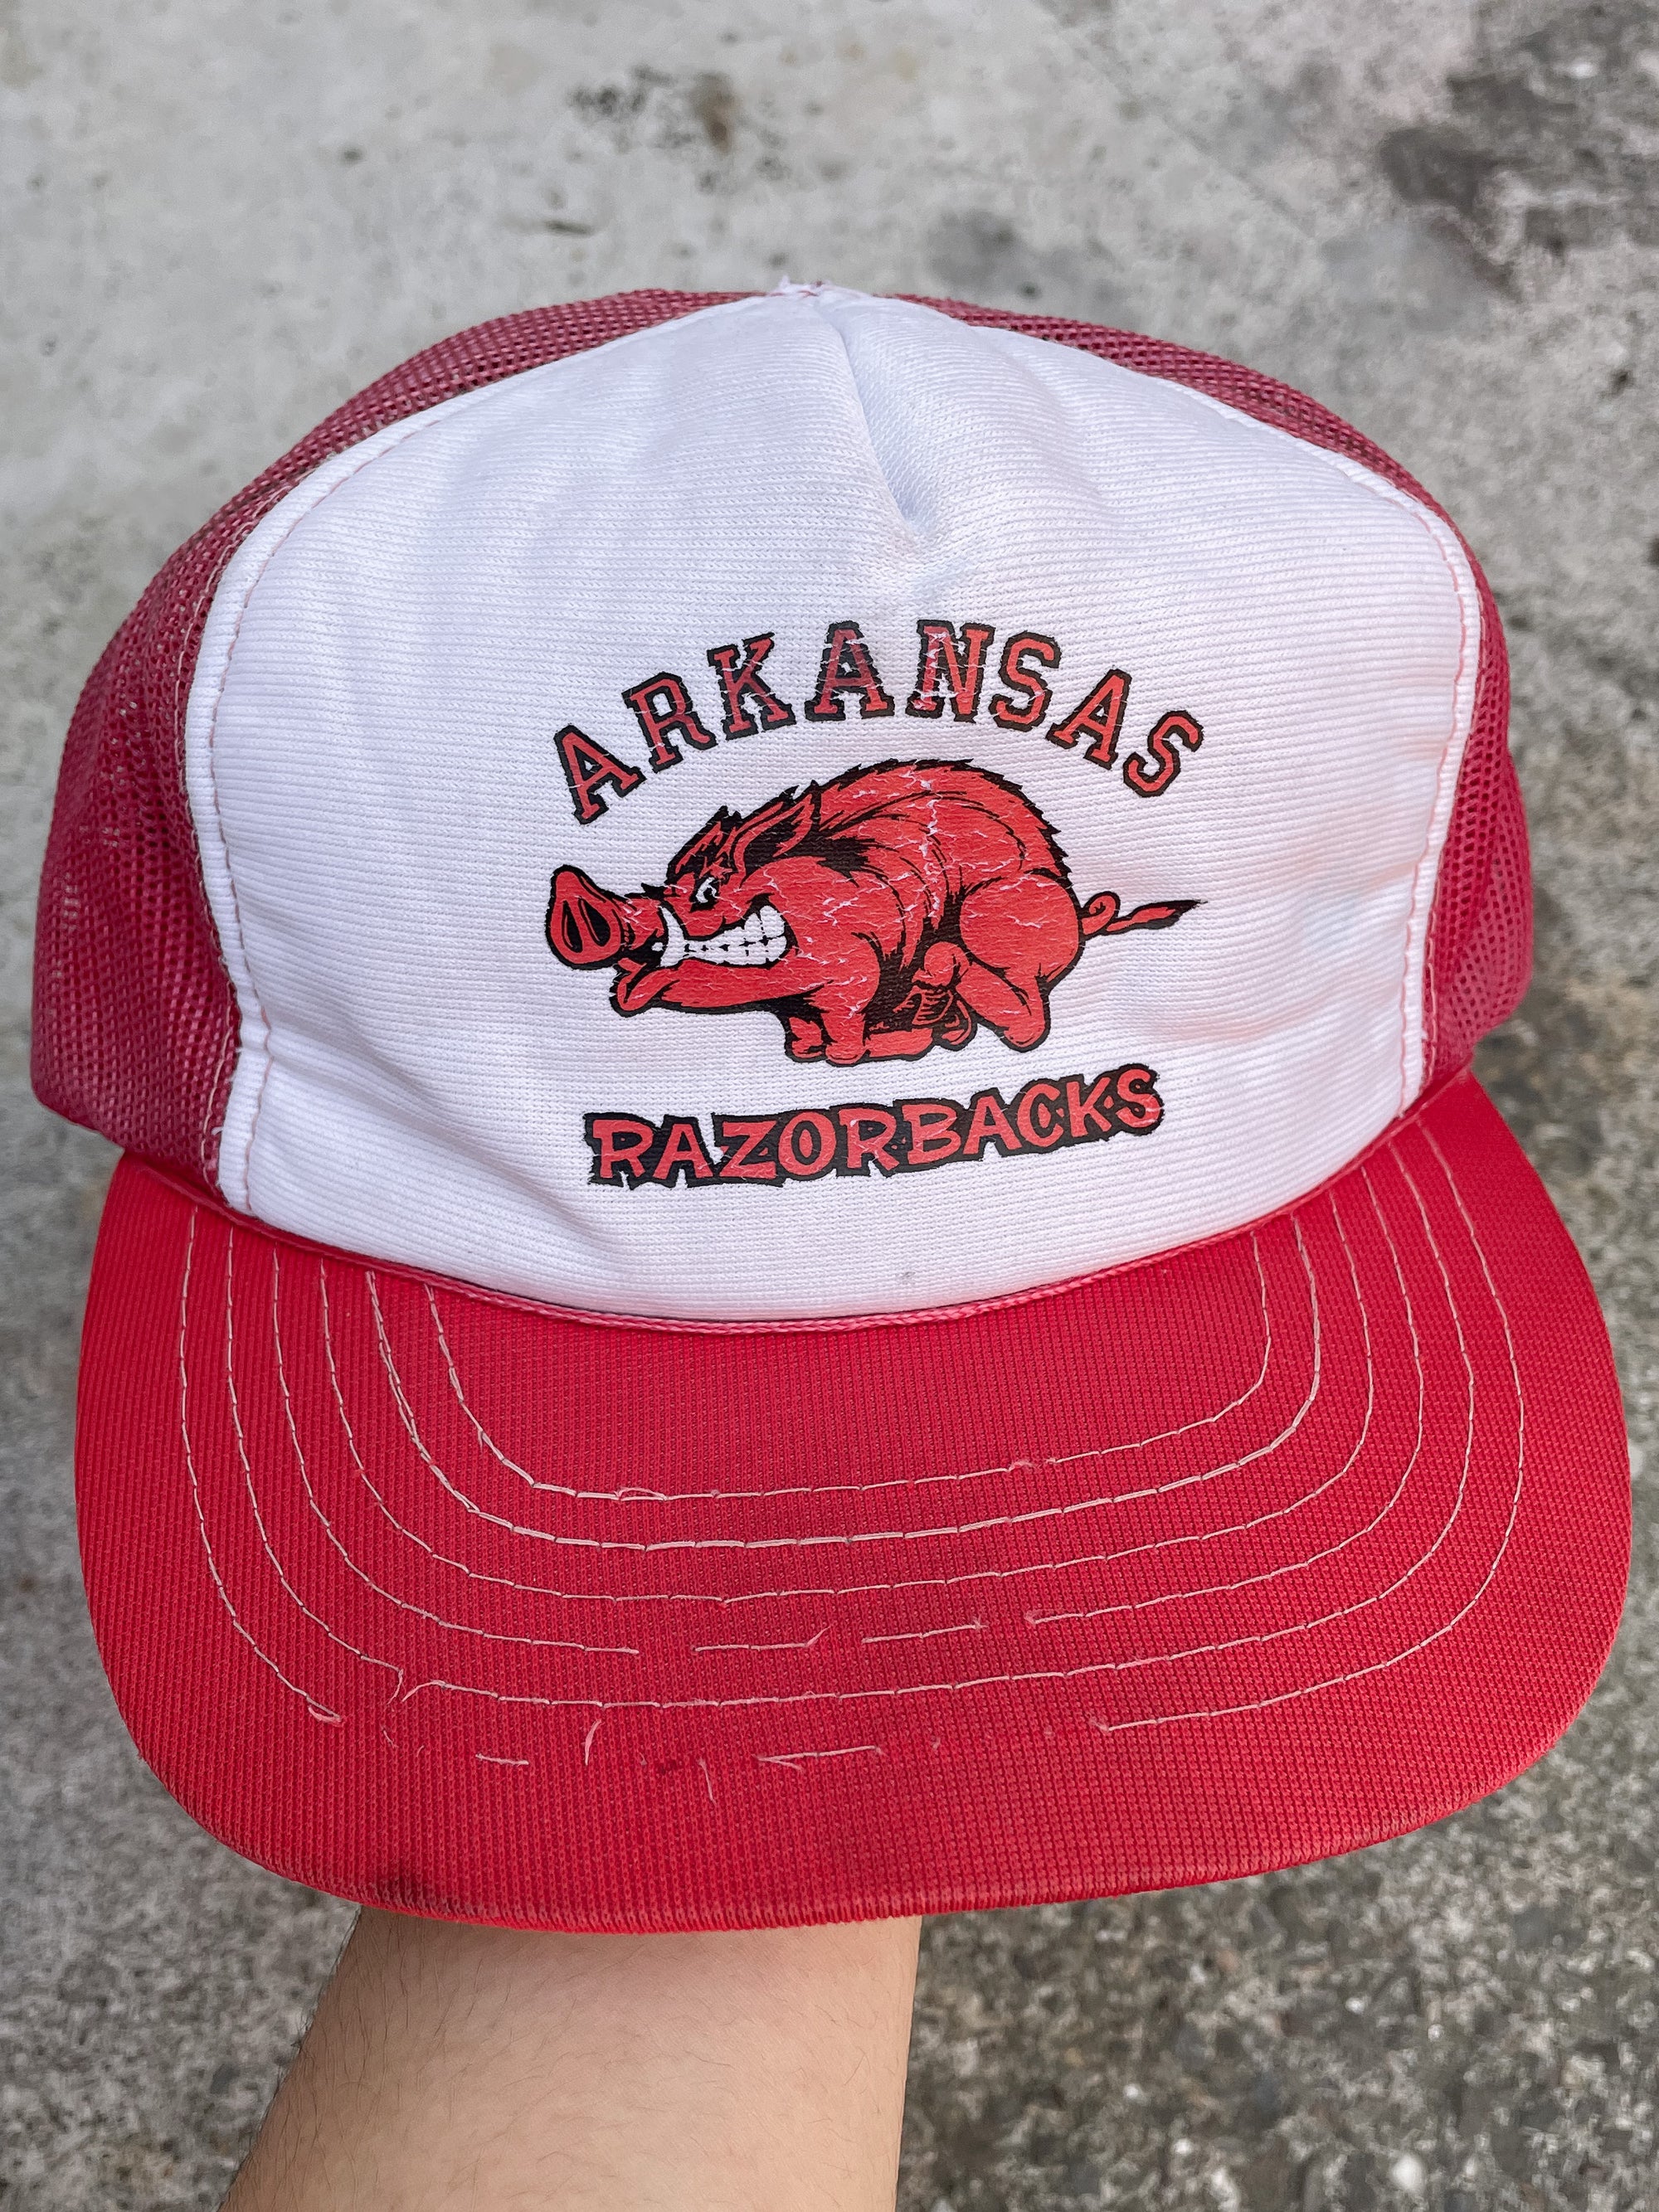 1980s/90s “Arkansas Razorbacks” Trucker Hat